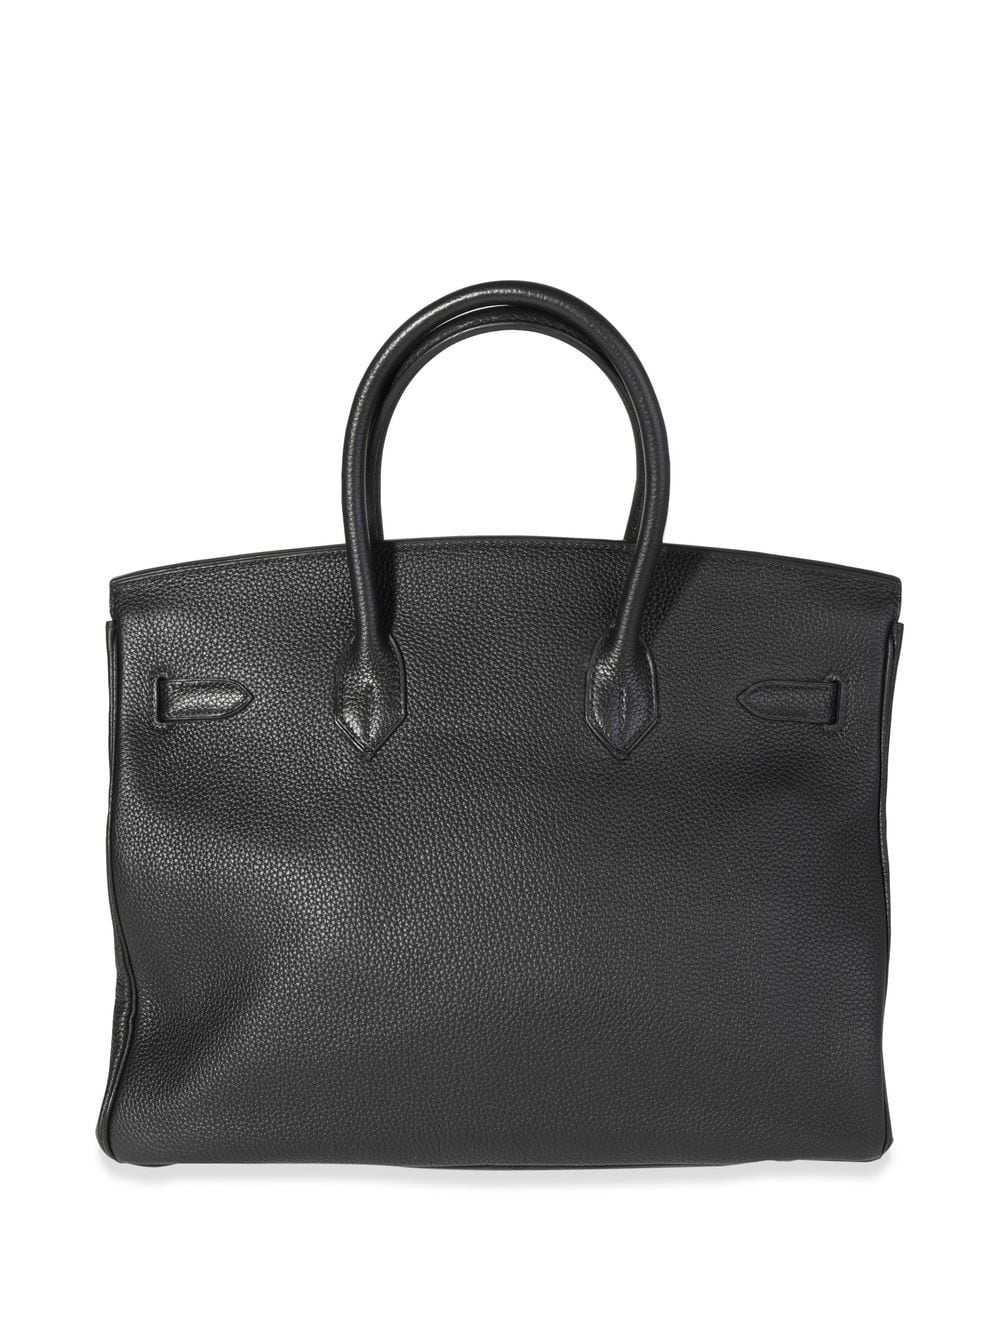 Hermès Pre-Owned Birkin 35 bag - Black - image 2